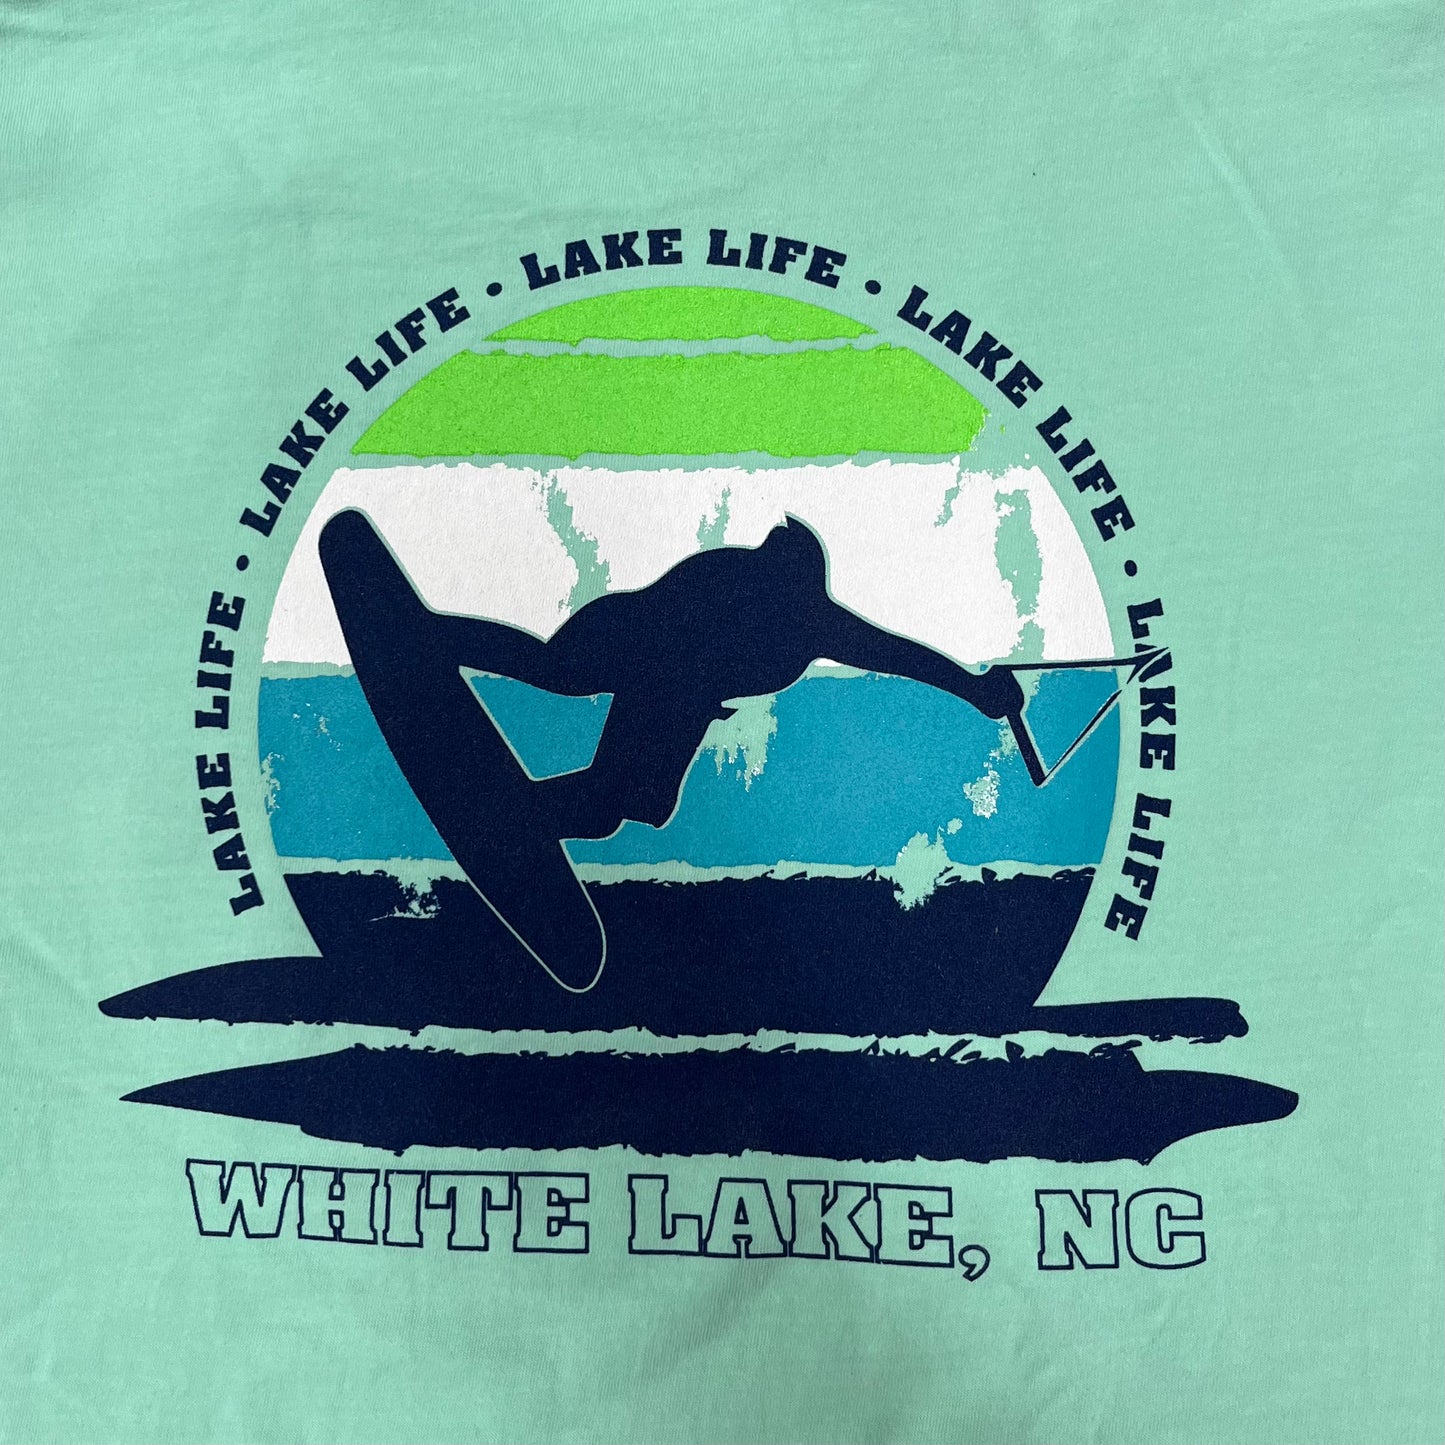 White Lake Tee - “Lake Life Wakeboarder”